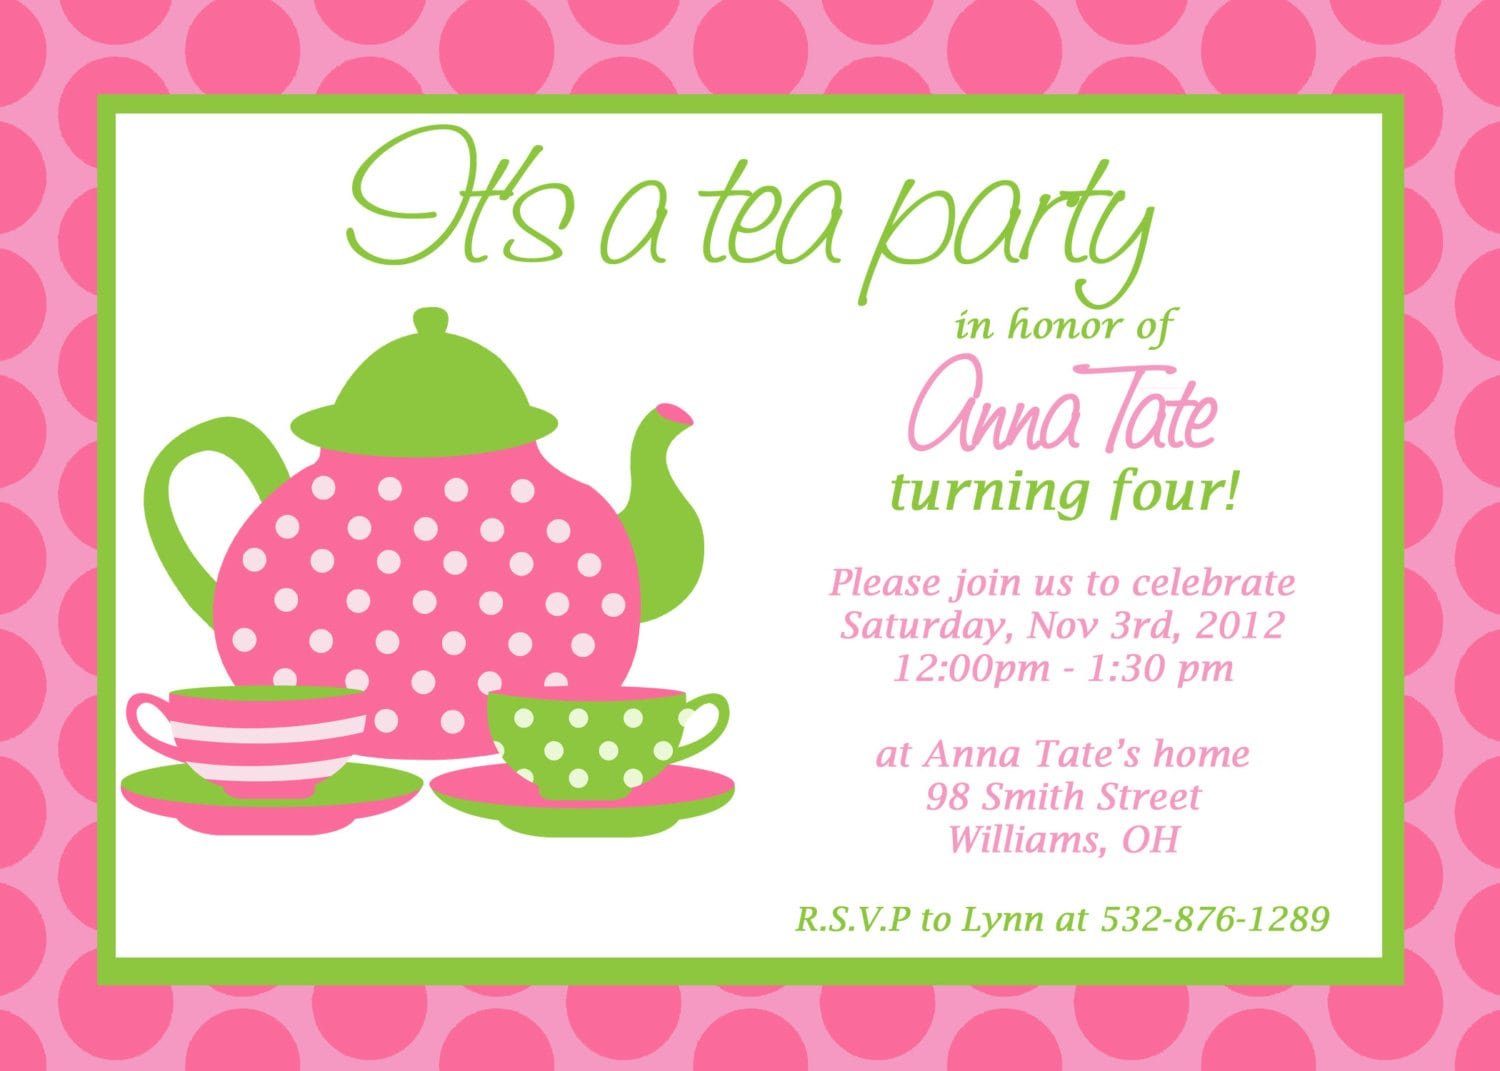 Tea Party Invitations